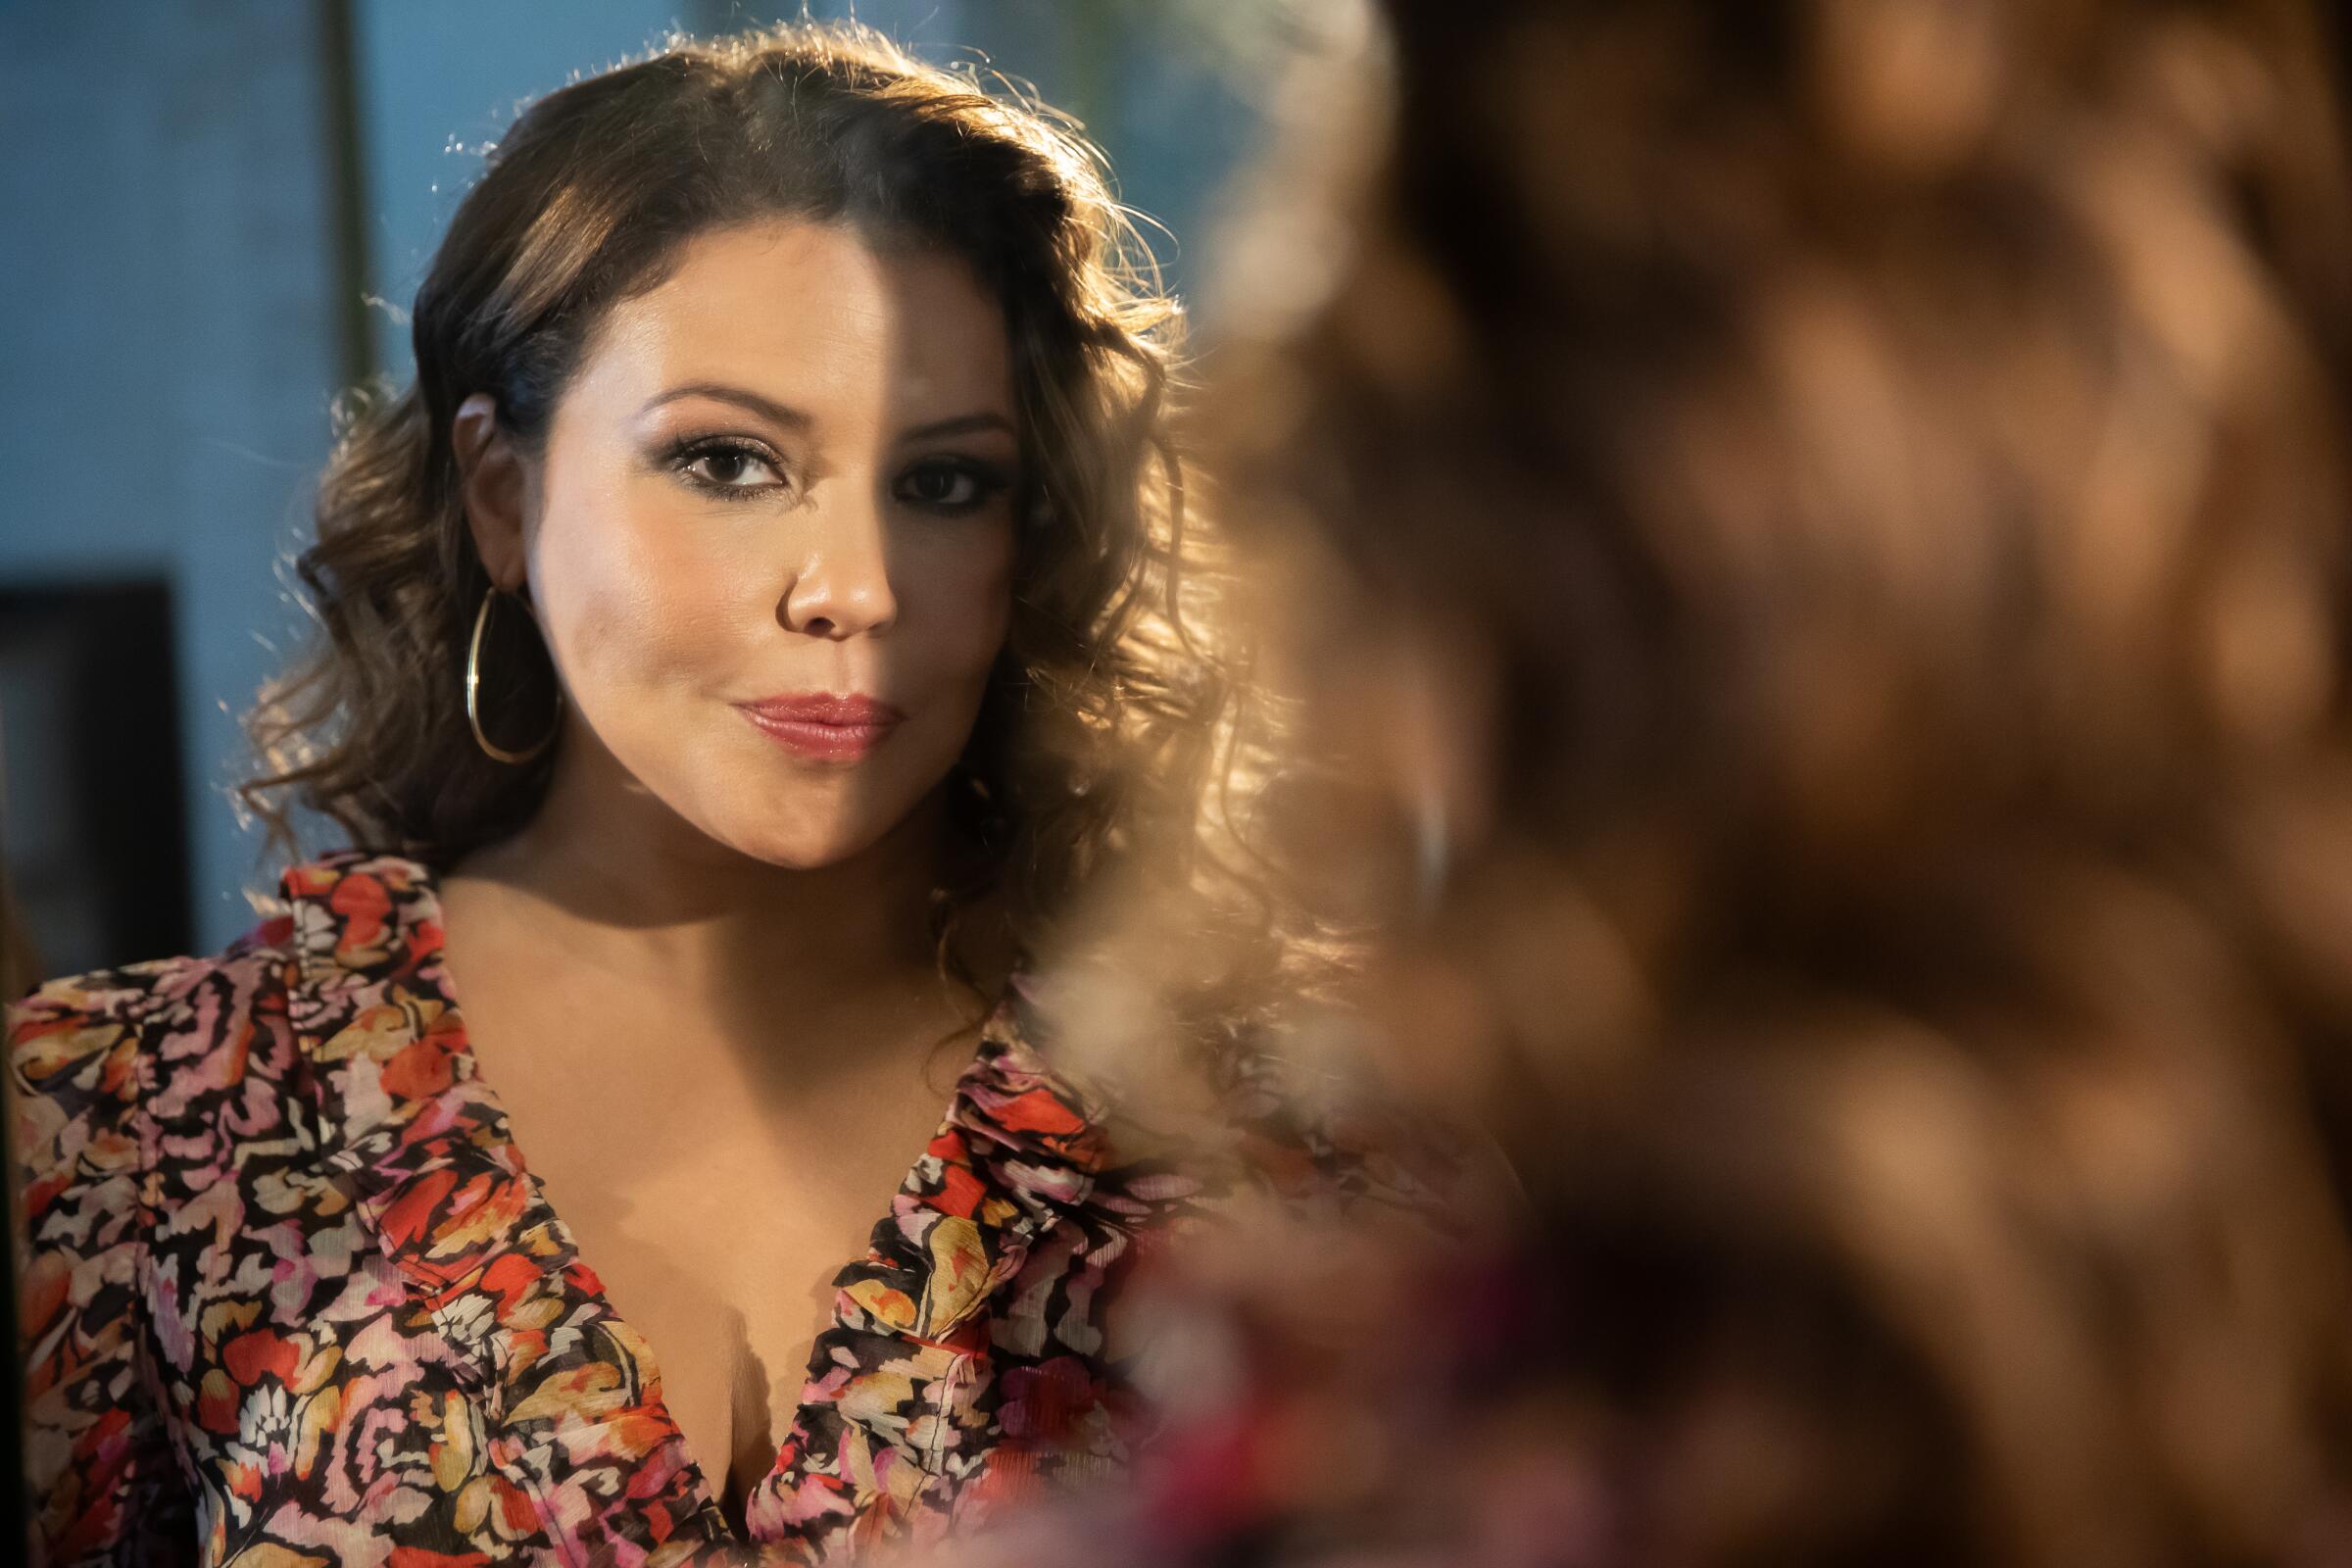 Actor Justina Machado photographed looking at the camera in a mirror